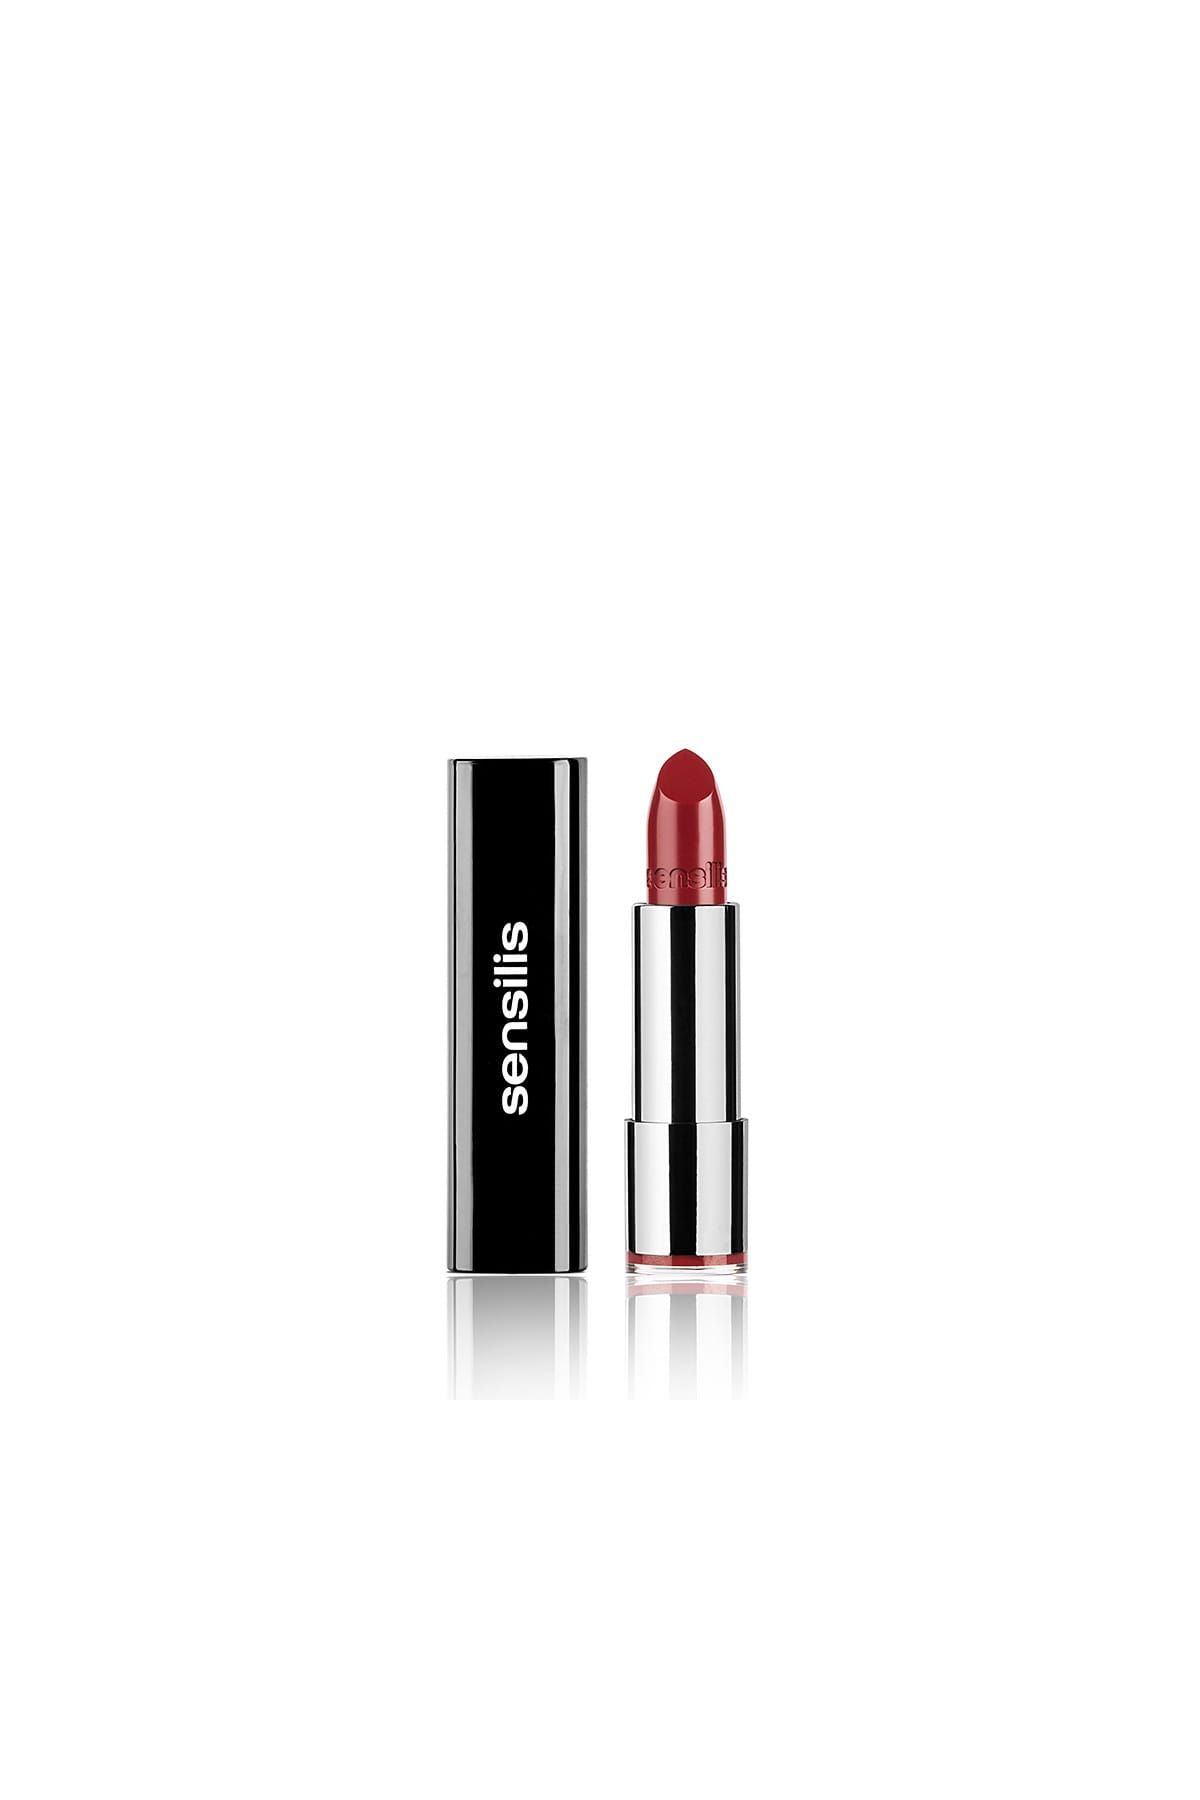 sensilis Ruj - Intense Matt Long-Lasting Lipstick 104 Bordeaux 8428749517504